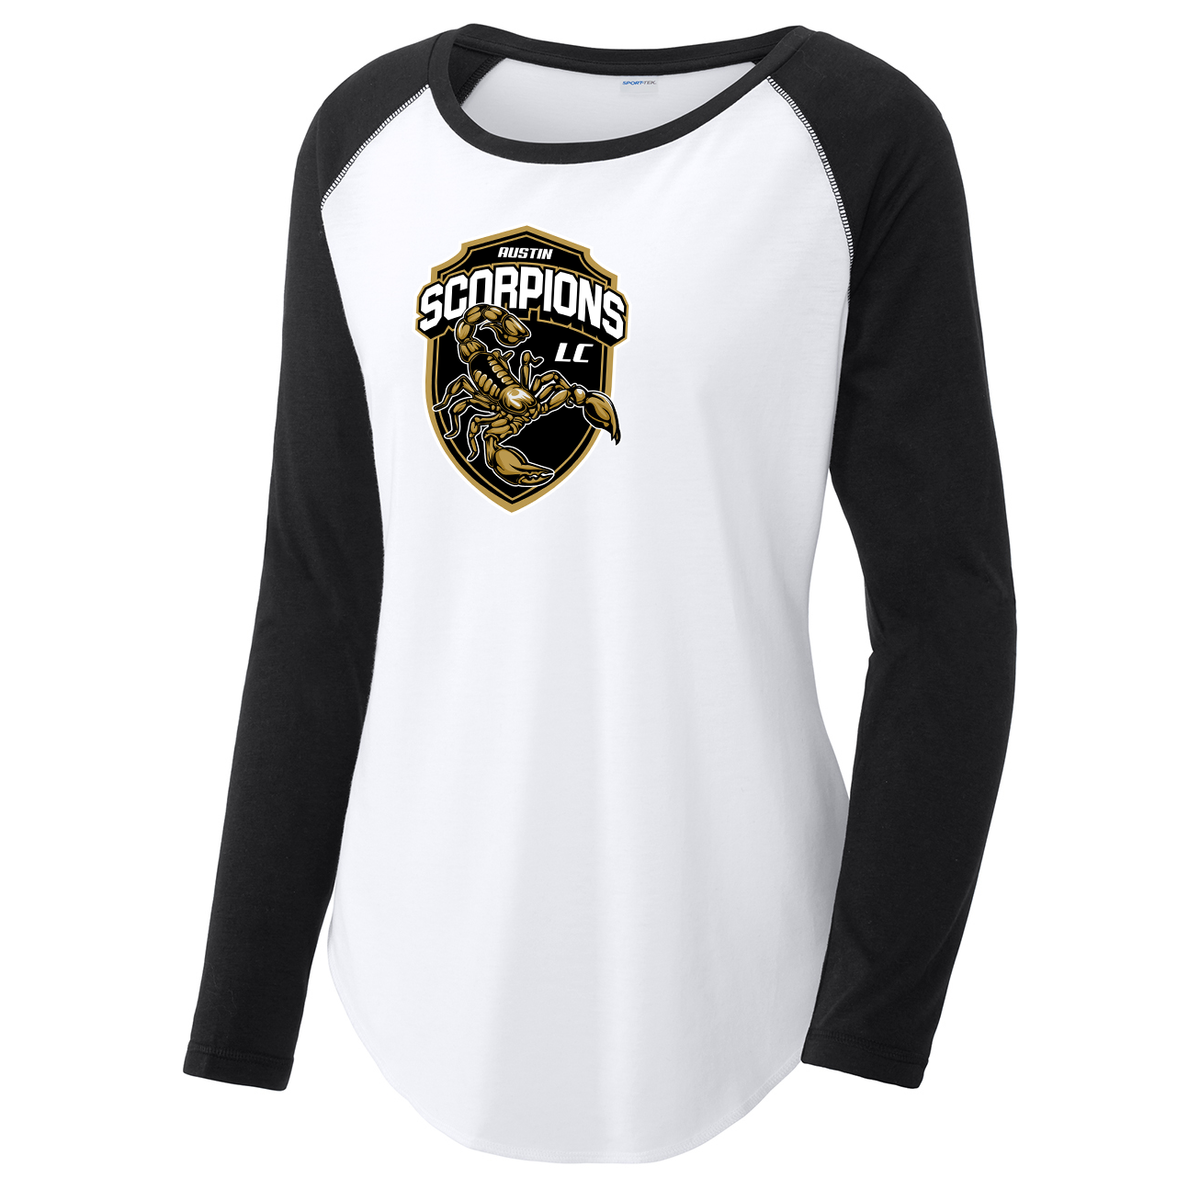 Austin Scorpions Lacrosse Club Women's Raglan Long Sleeve CottonTouch